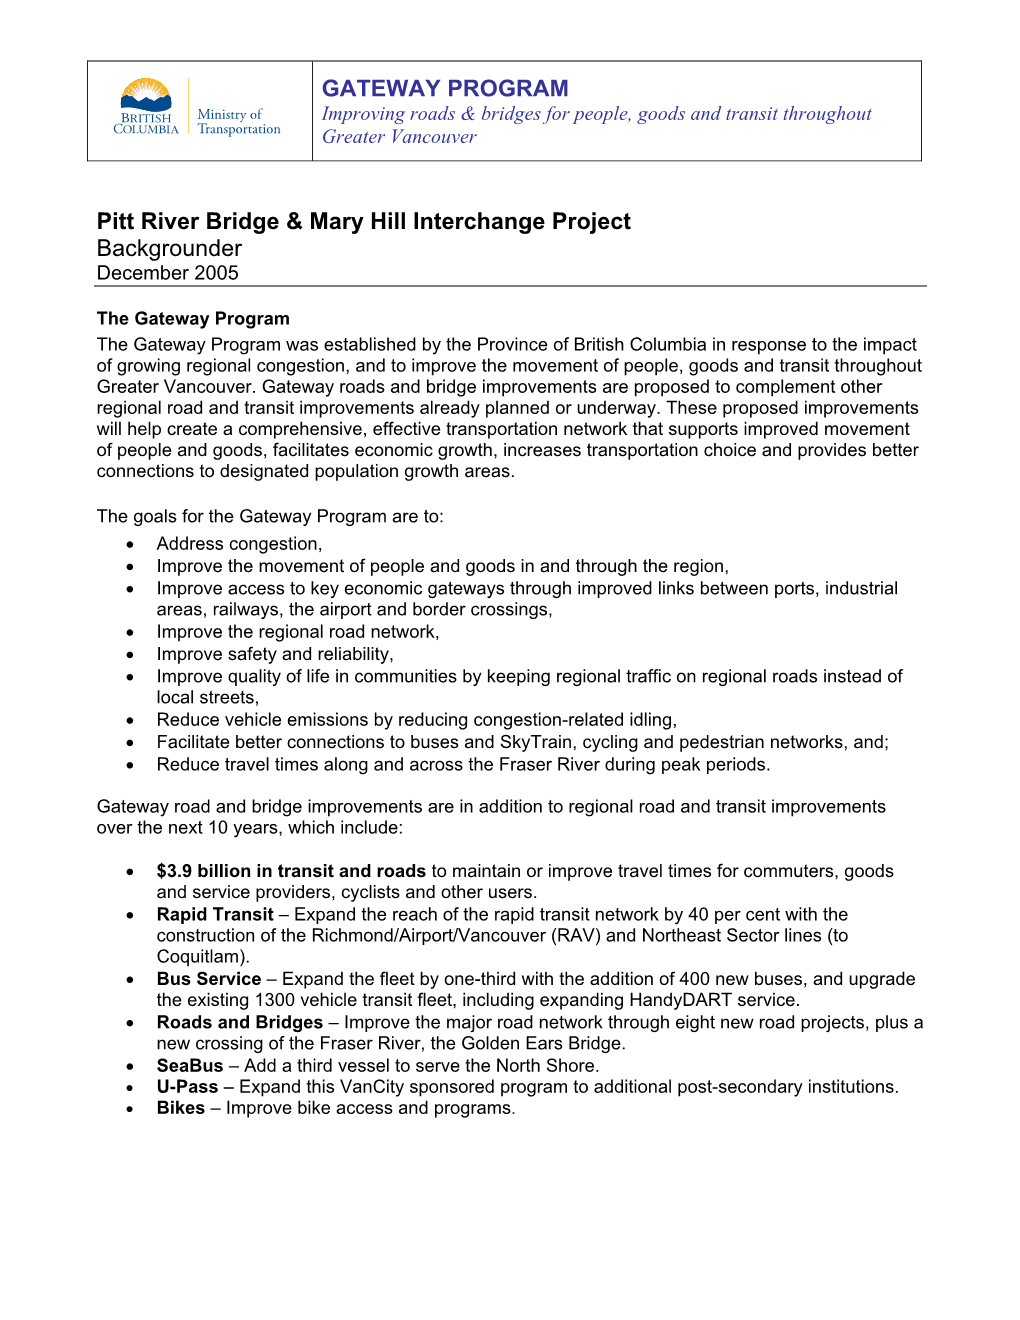 Backgrounder: Pitt River Bridge & Mary Hill Interchange Project